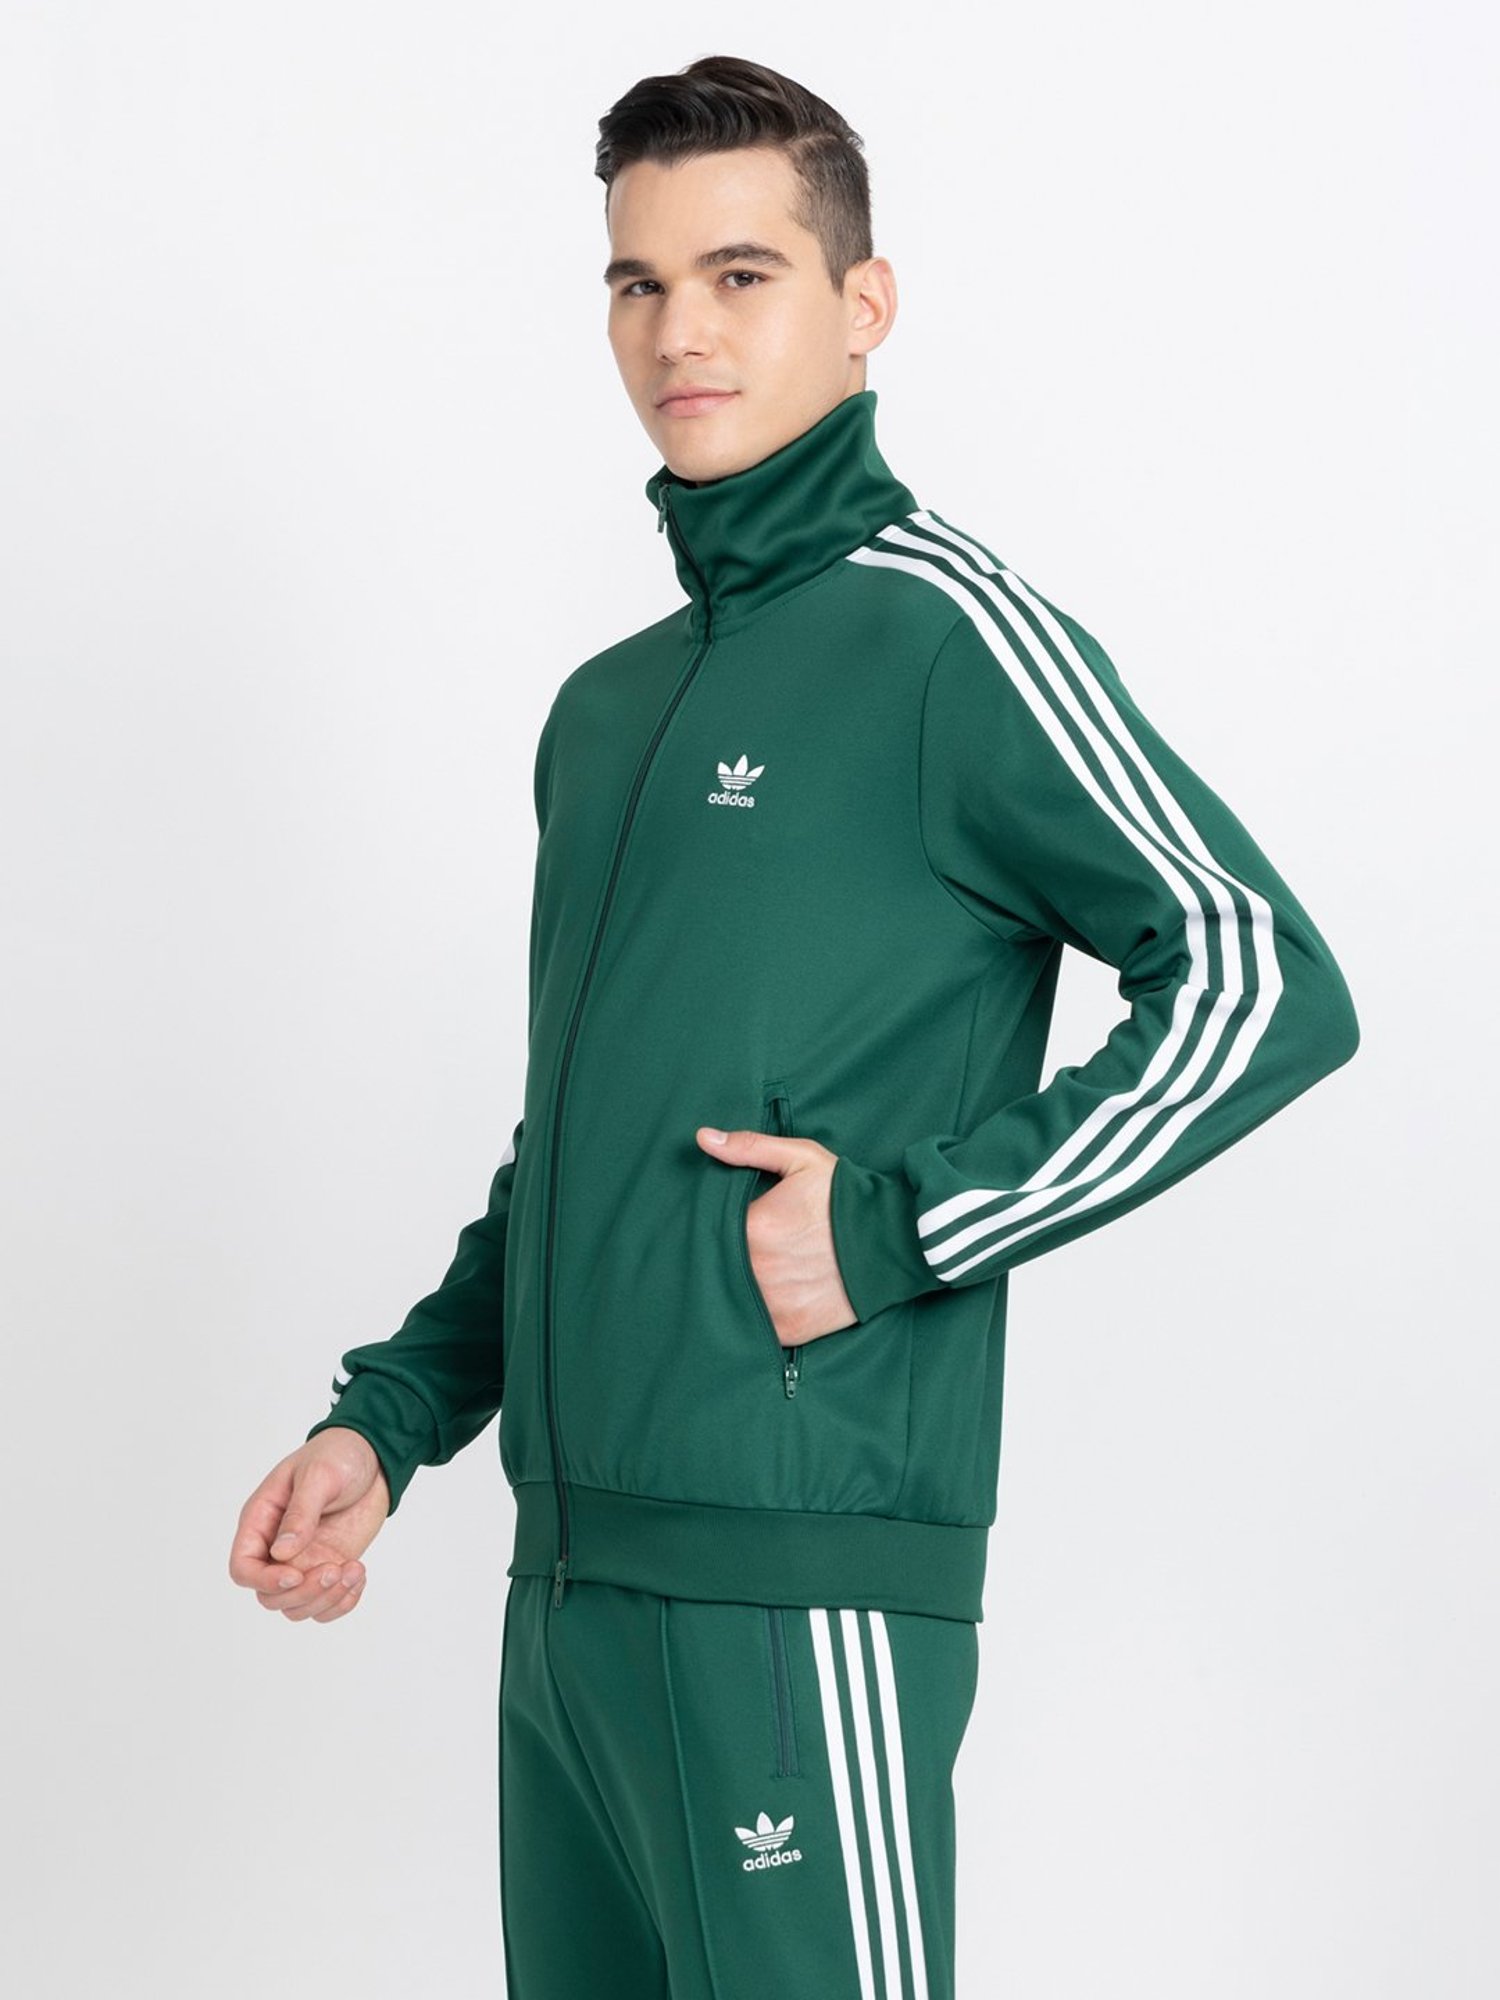 Adidas Originals Worldwide Stan Smith Track Jacket | Track jackets, Adidas  originals, Jacket style